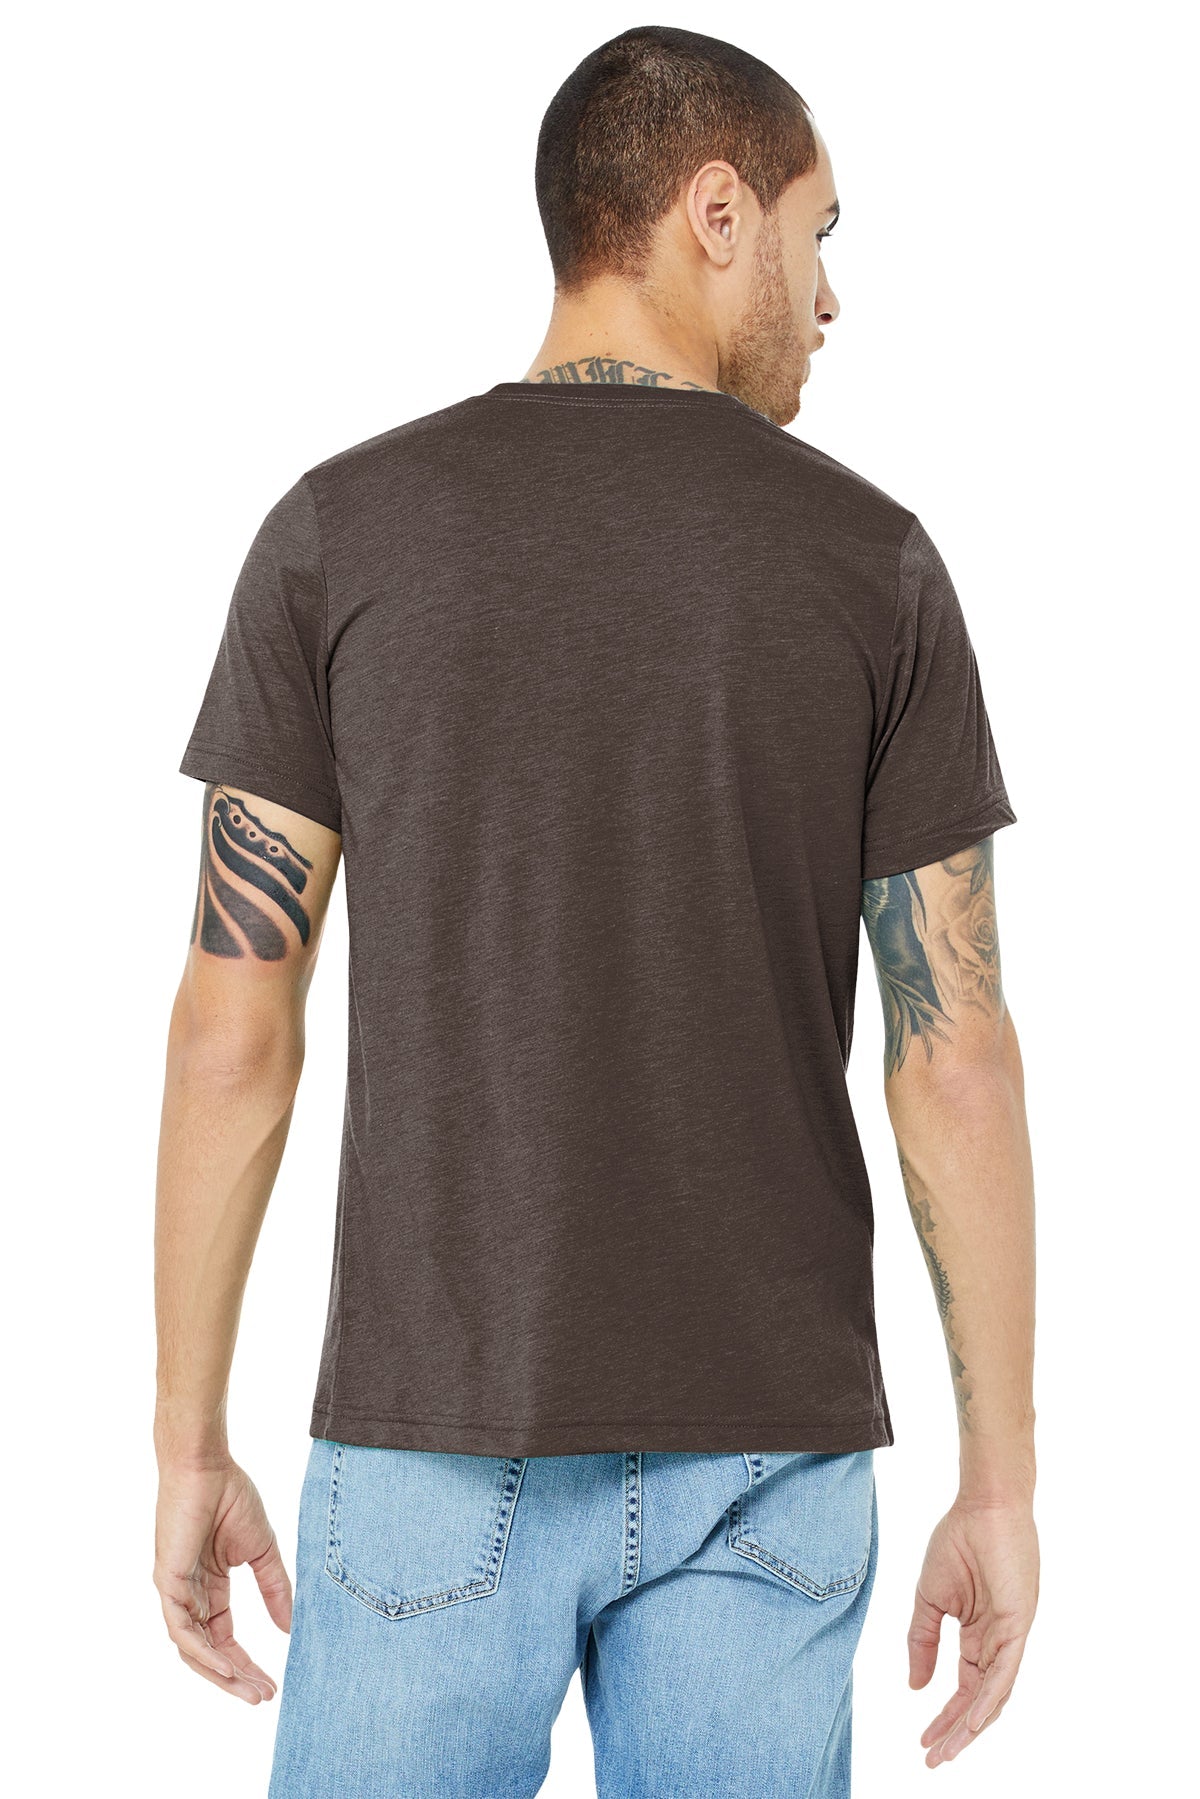 bella + canvas unisex triblend short sleeve t-shirt 3413c brown triblend